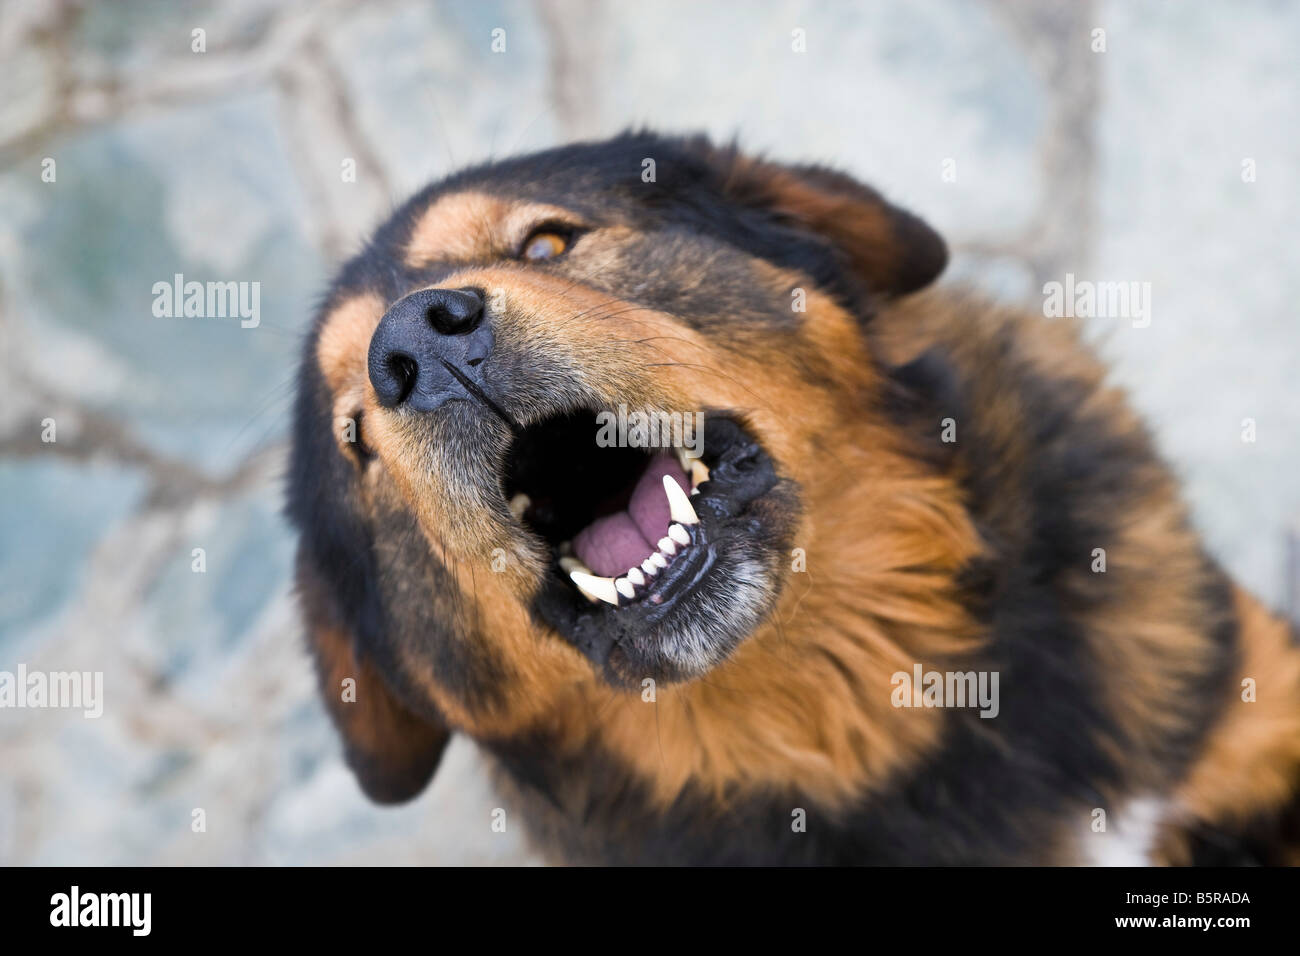 Big angry fierce dog showing teeth. JMH3625 Stock Photo